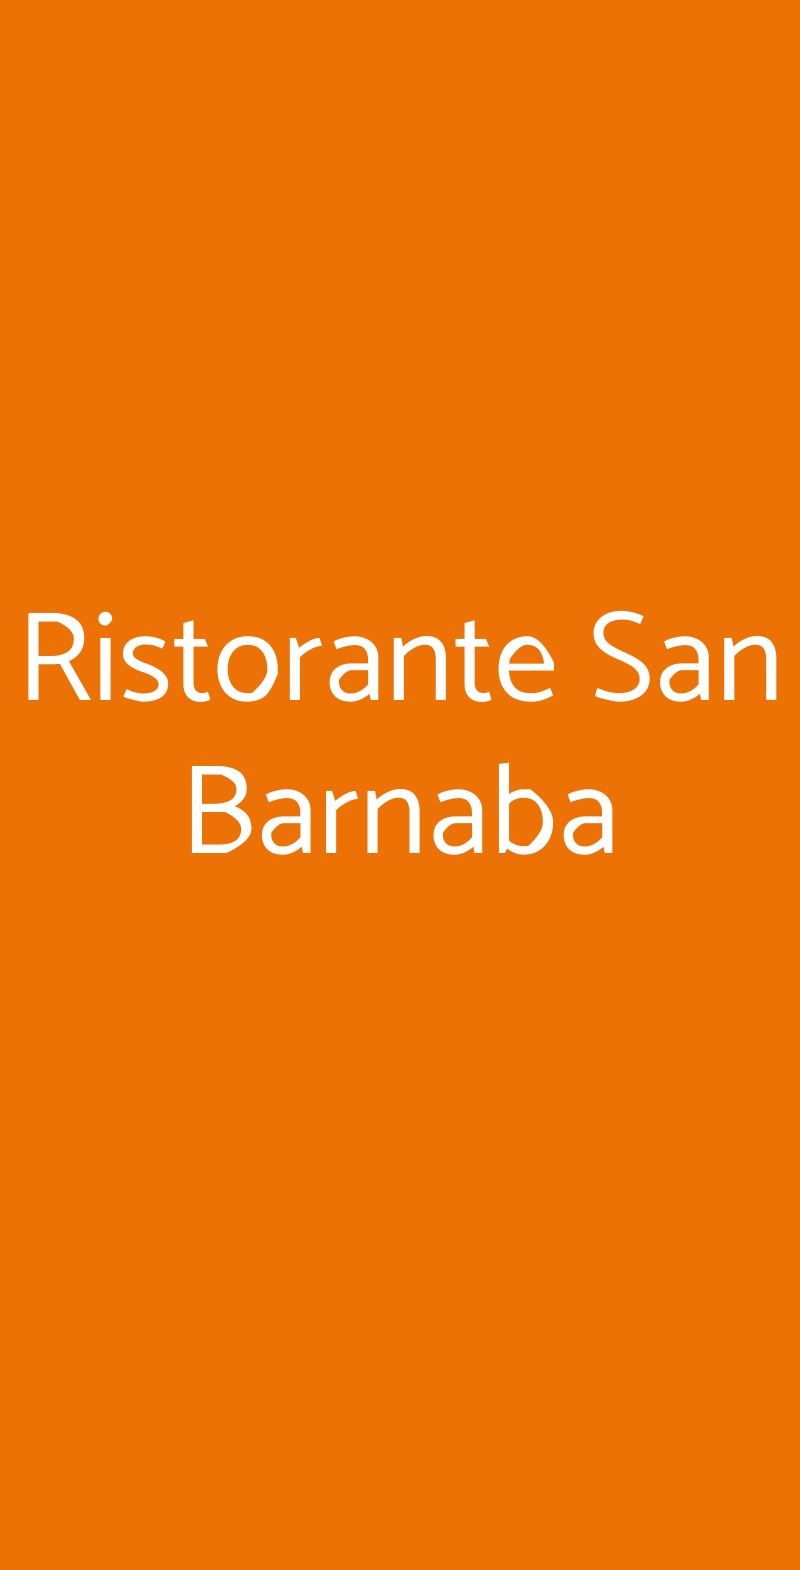 Ristorante San Barnaba Parma menù 1 pagina